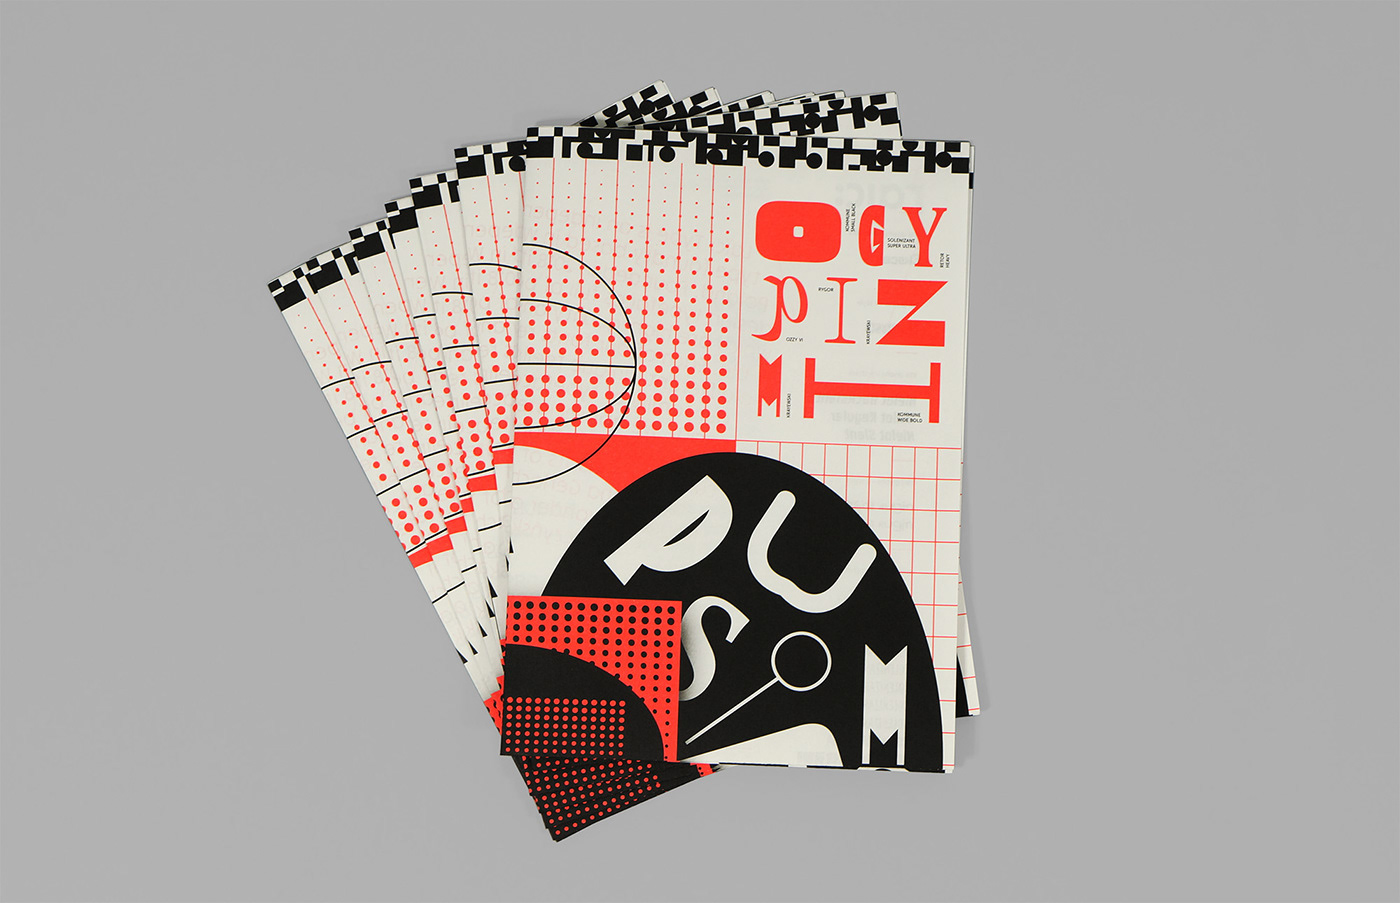 alternative laic pantone poster posterdesign screenprint silkprint specimen Typeface wedzicka